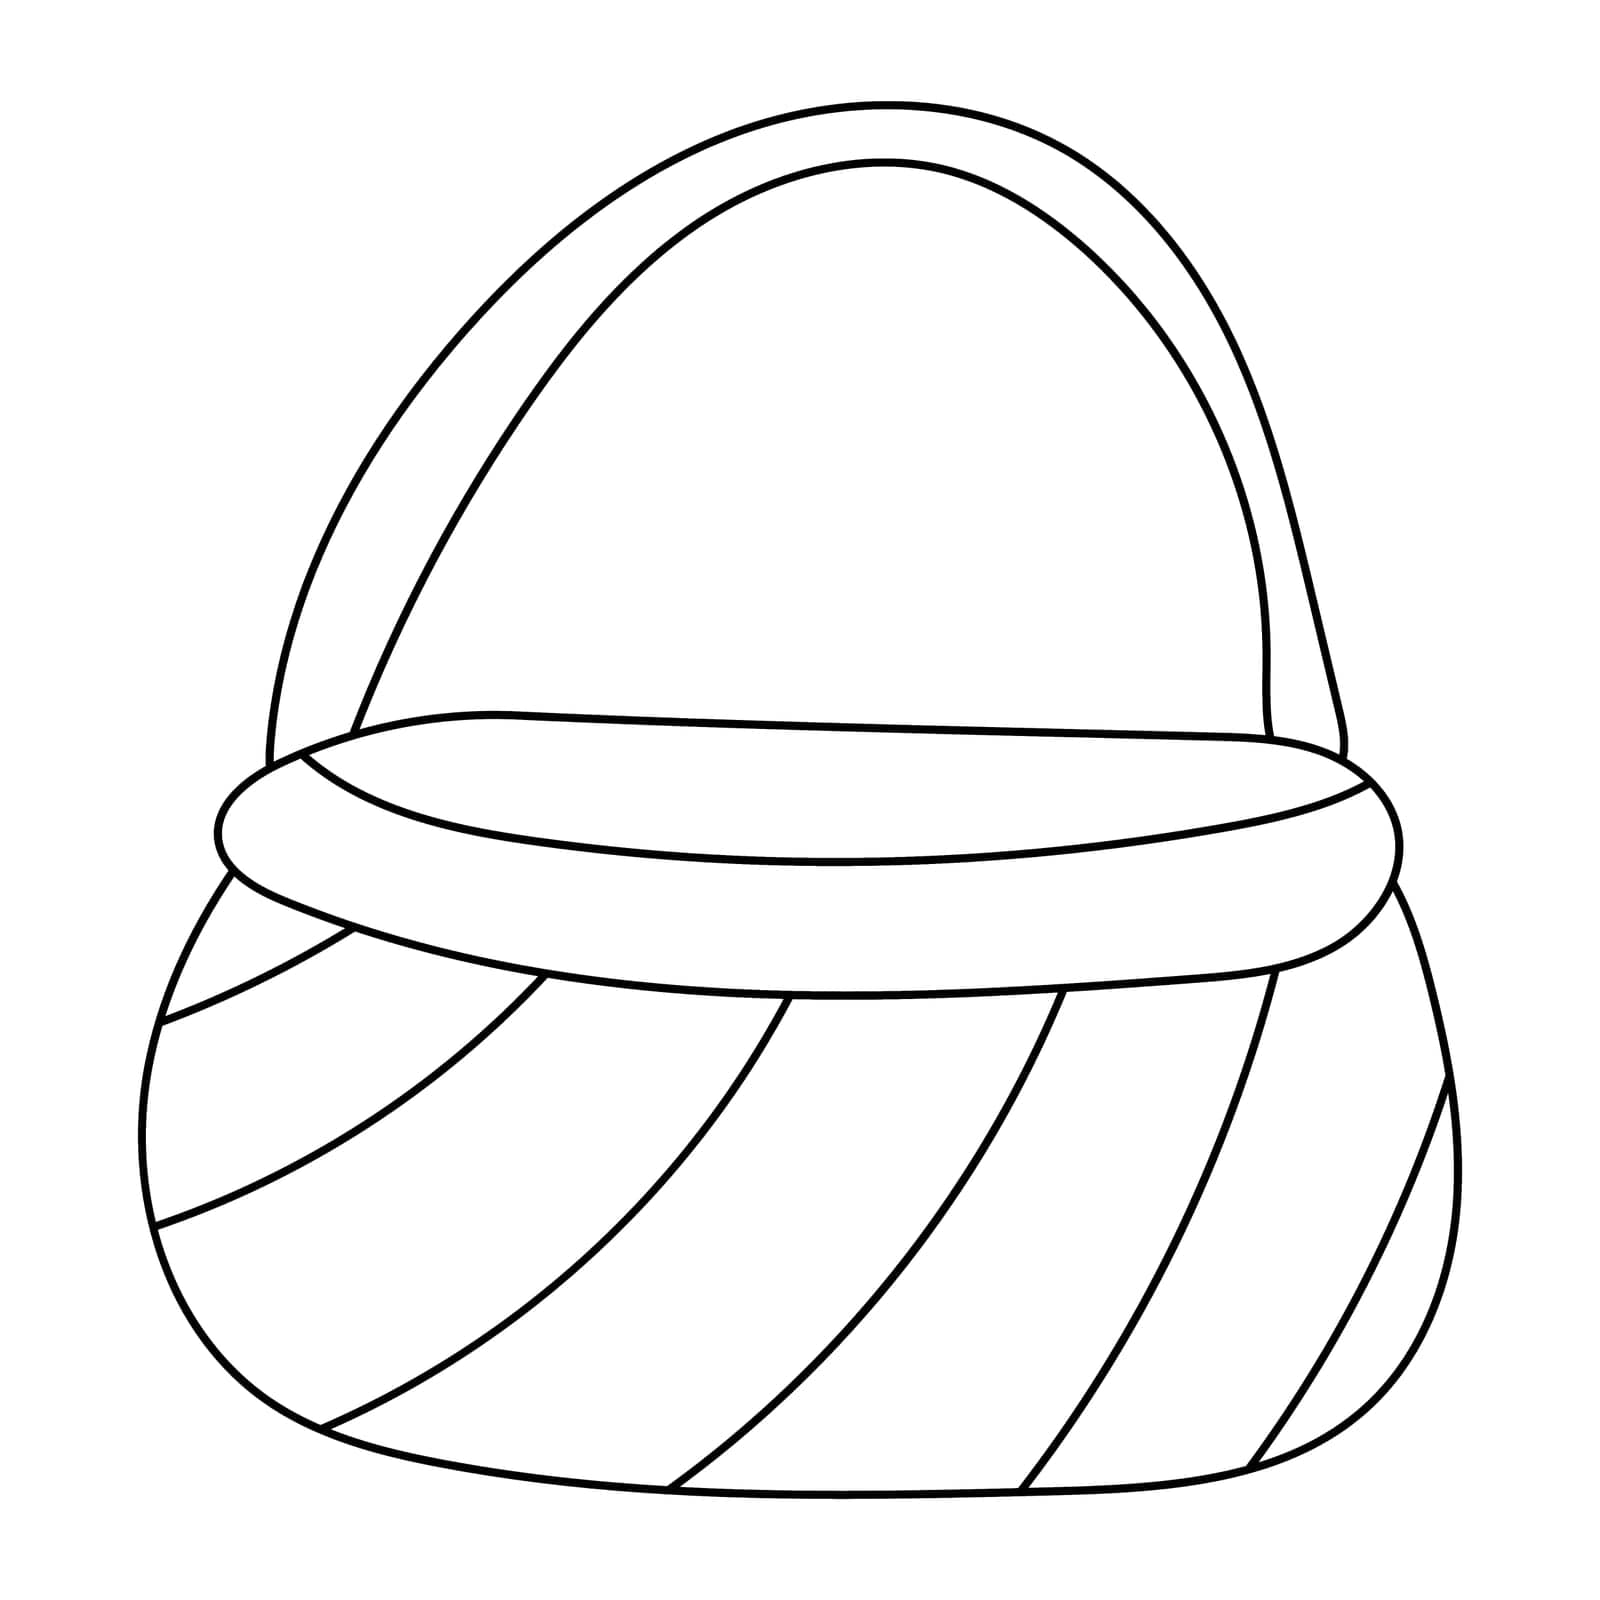 easter wicker basket hunting eggs icon element line doodle vector illustration